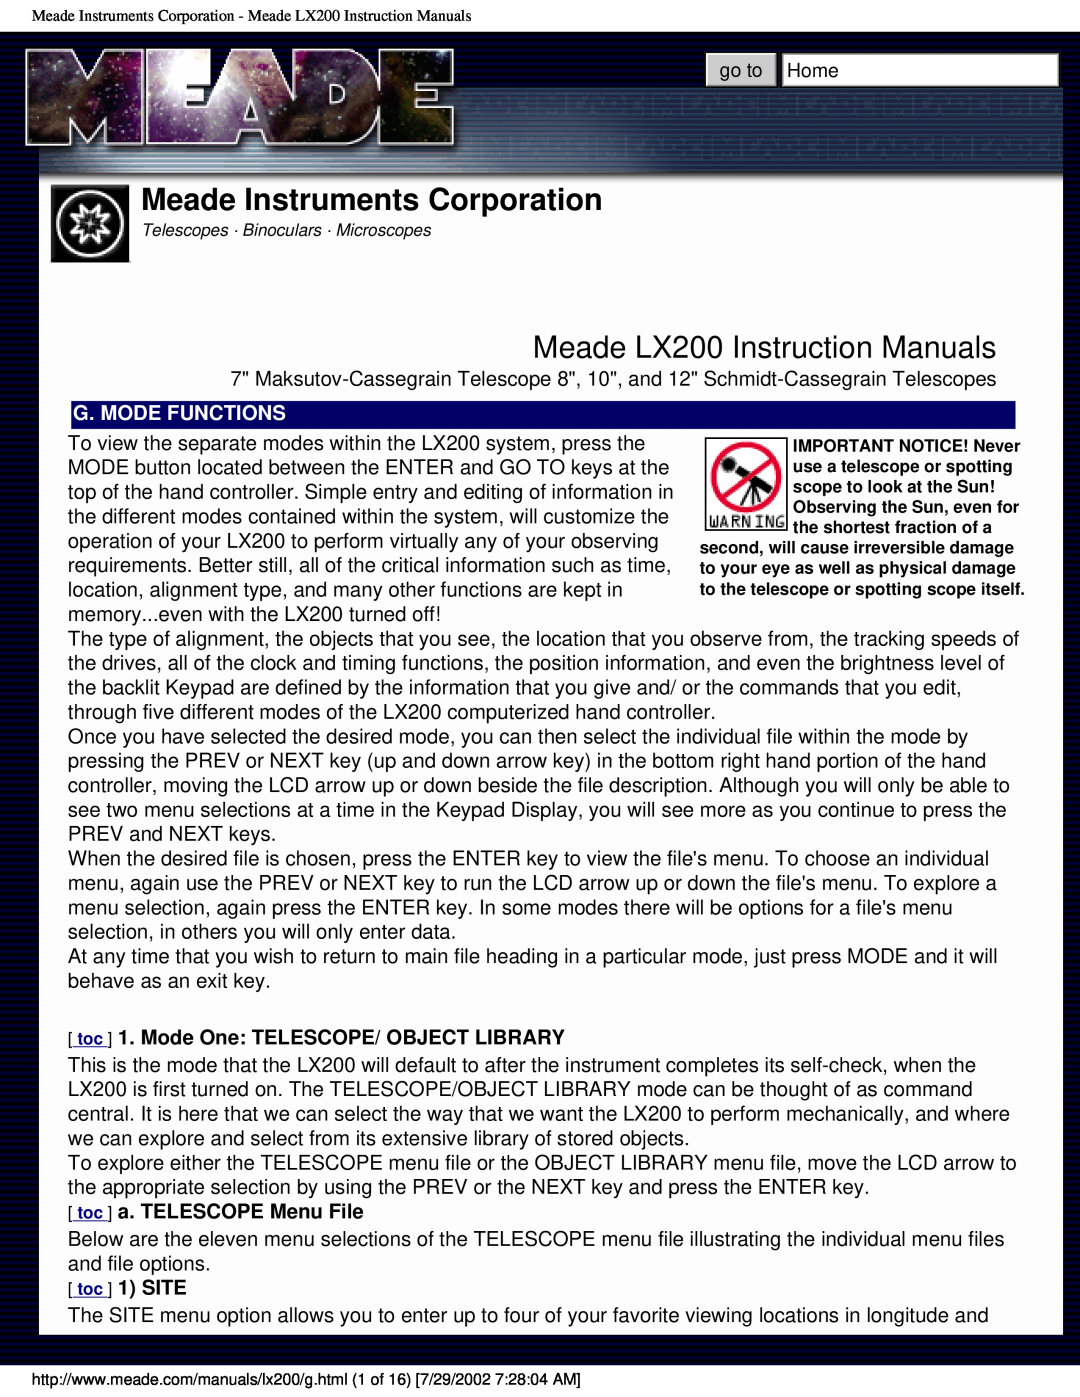 Meade Meade Instruments Corporation, Meade LX200 Instruction Manuals, G. Mode Functions, toc a. TELESCOPE Menu File 